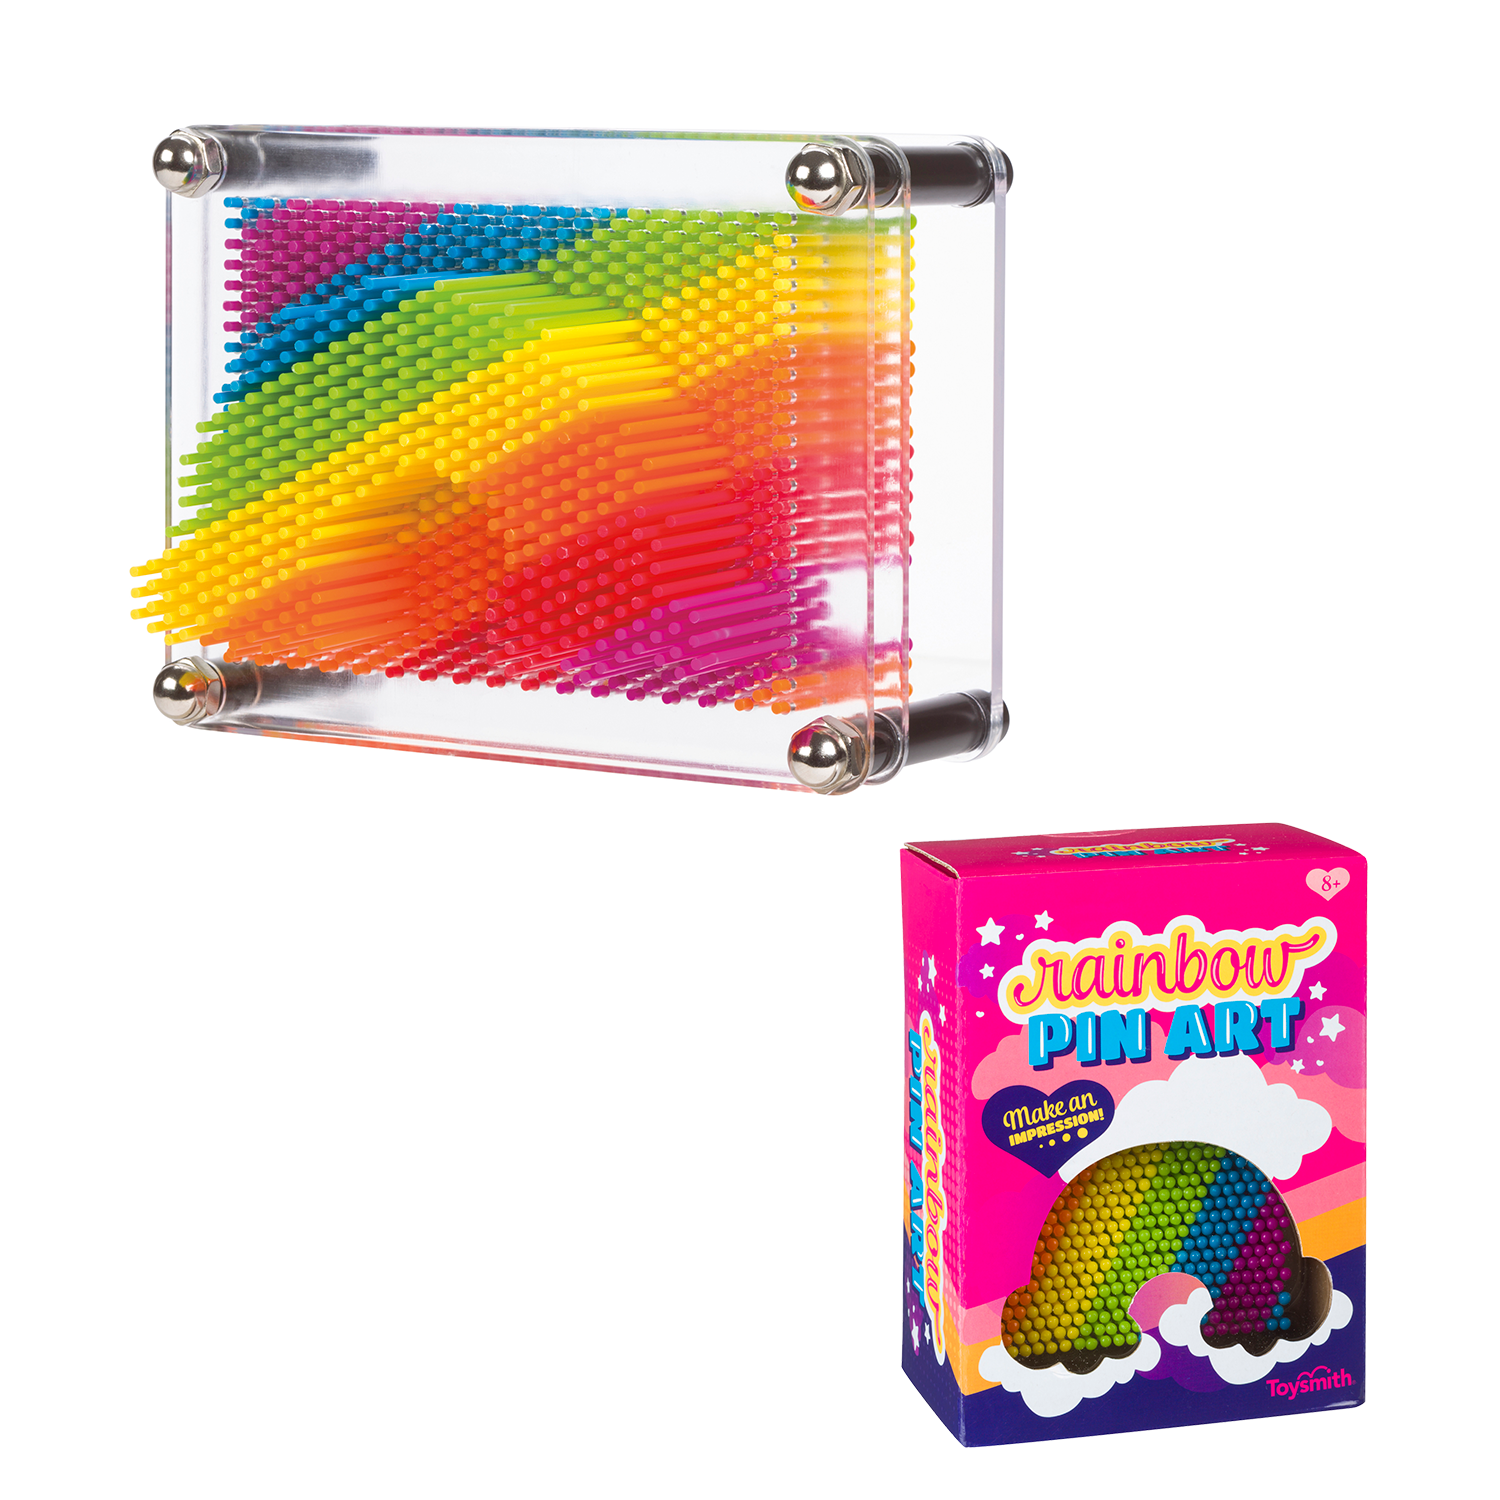 Retro Rainbow Pin Art Executive Desktop Toy Novelty GIft Boxed 